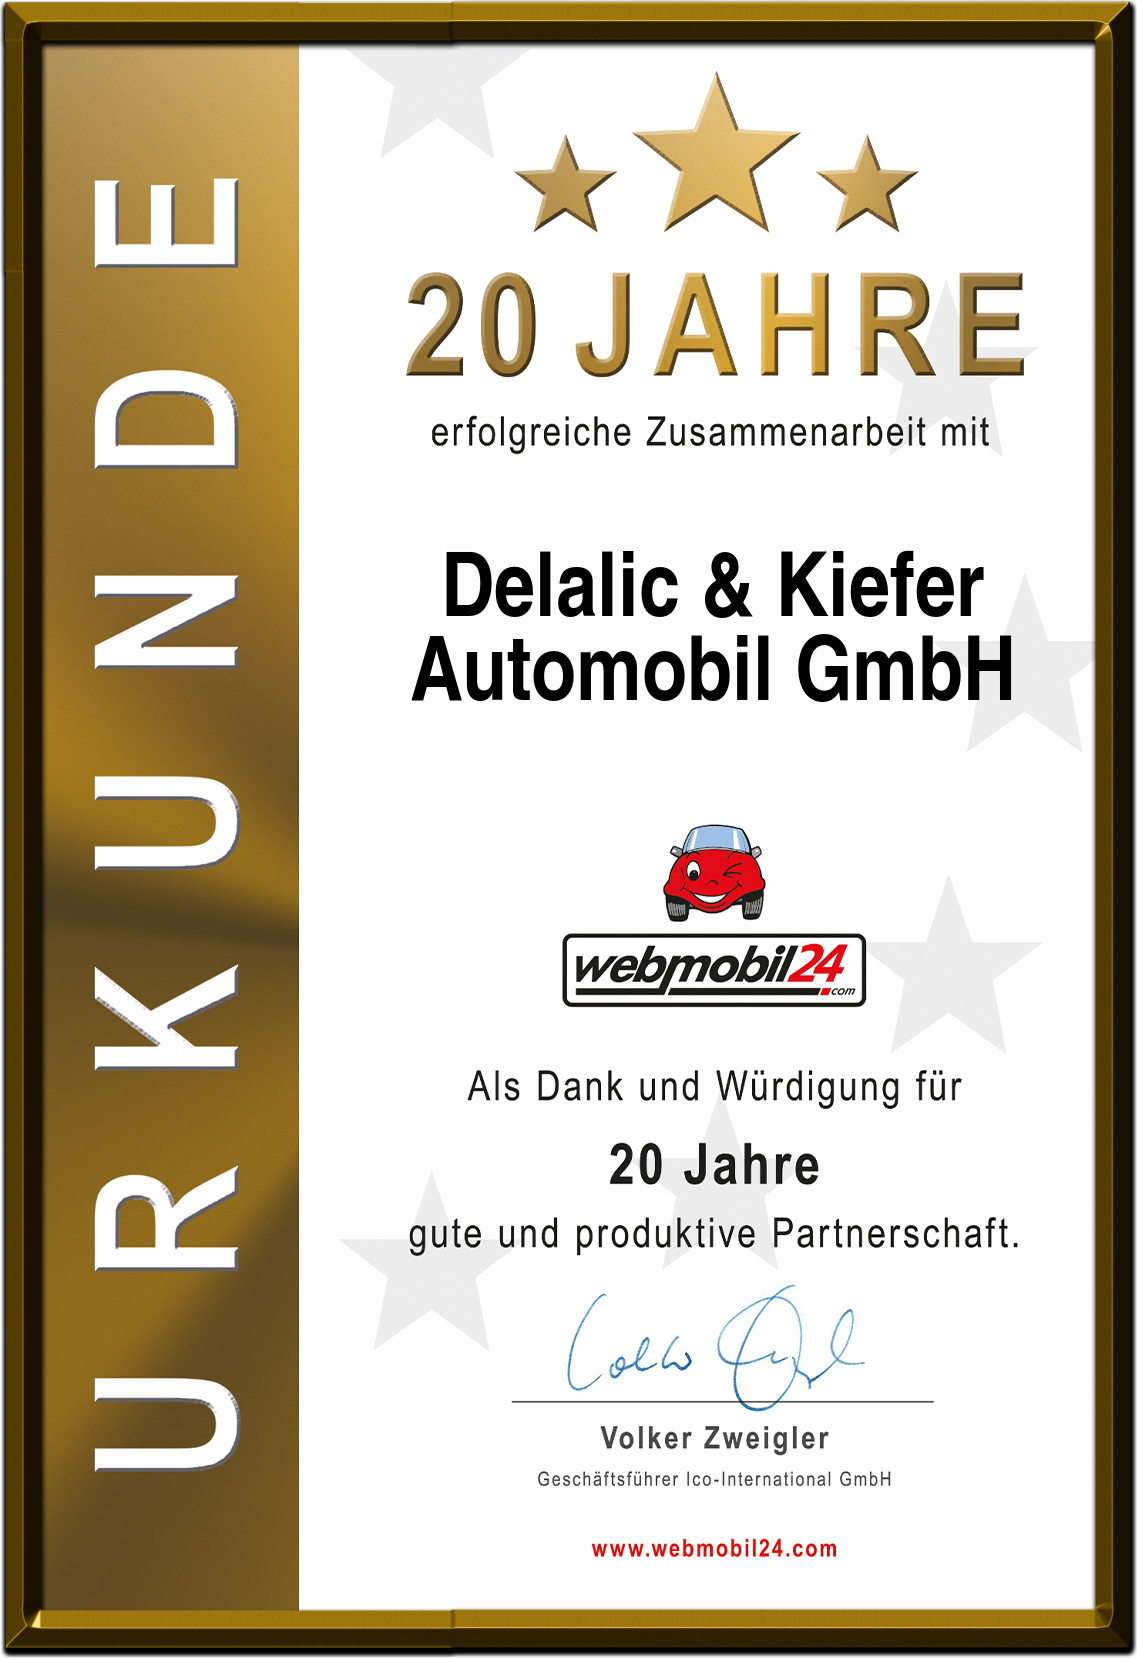 Delalic & KieferAutomobil GmbH